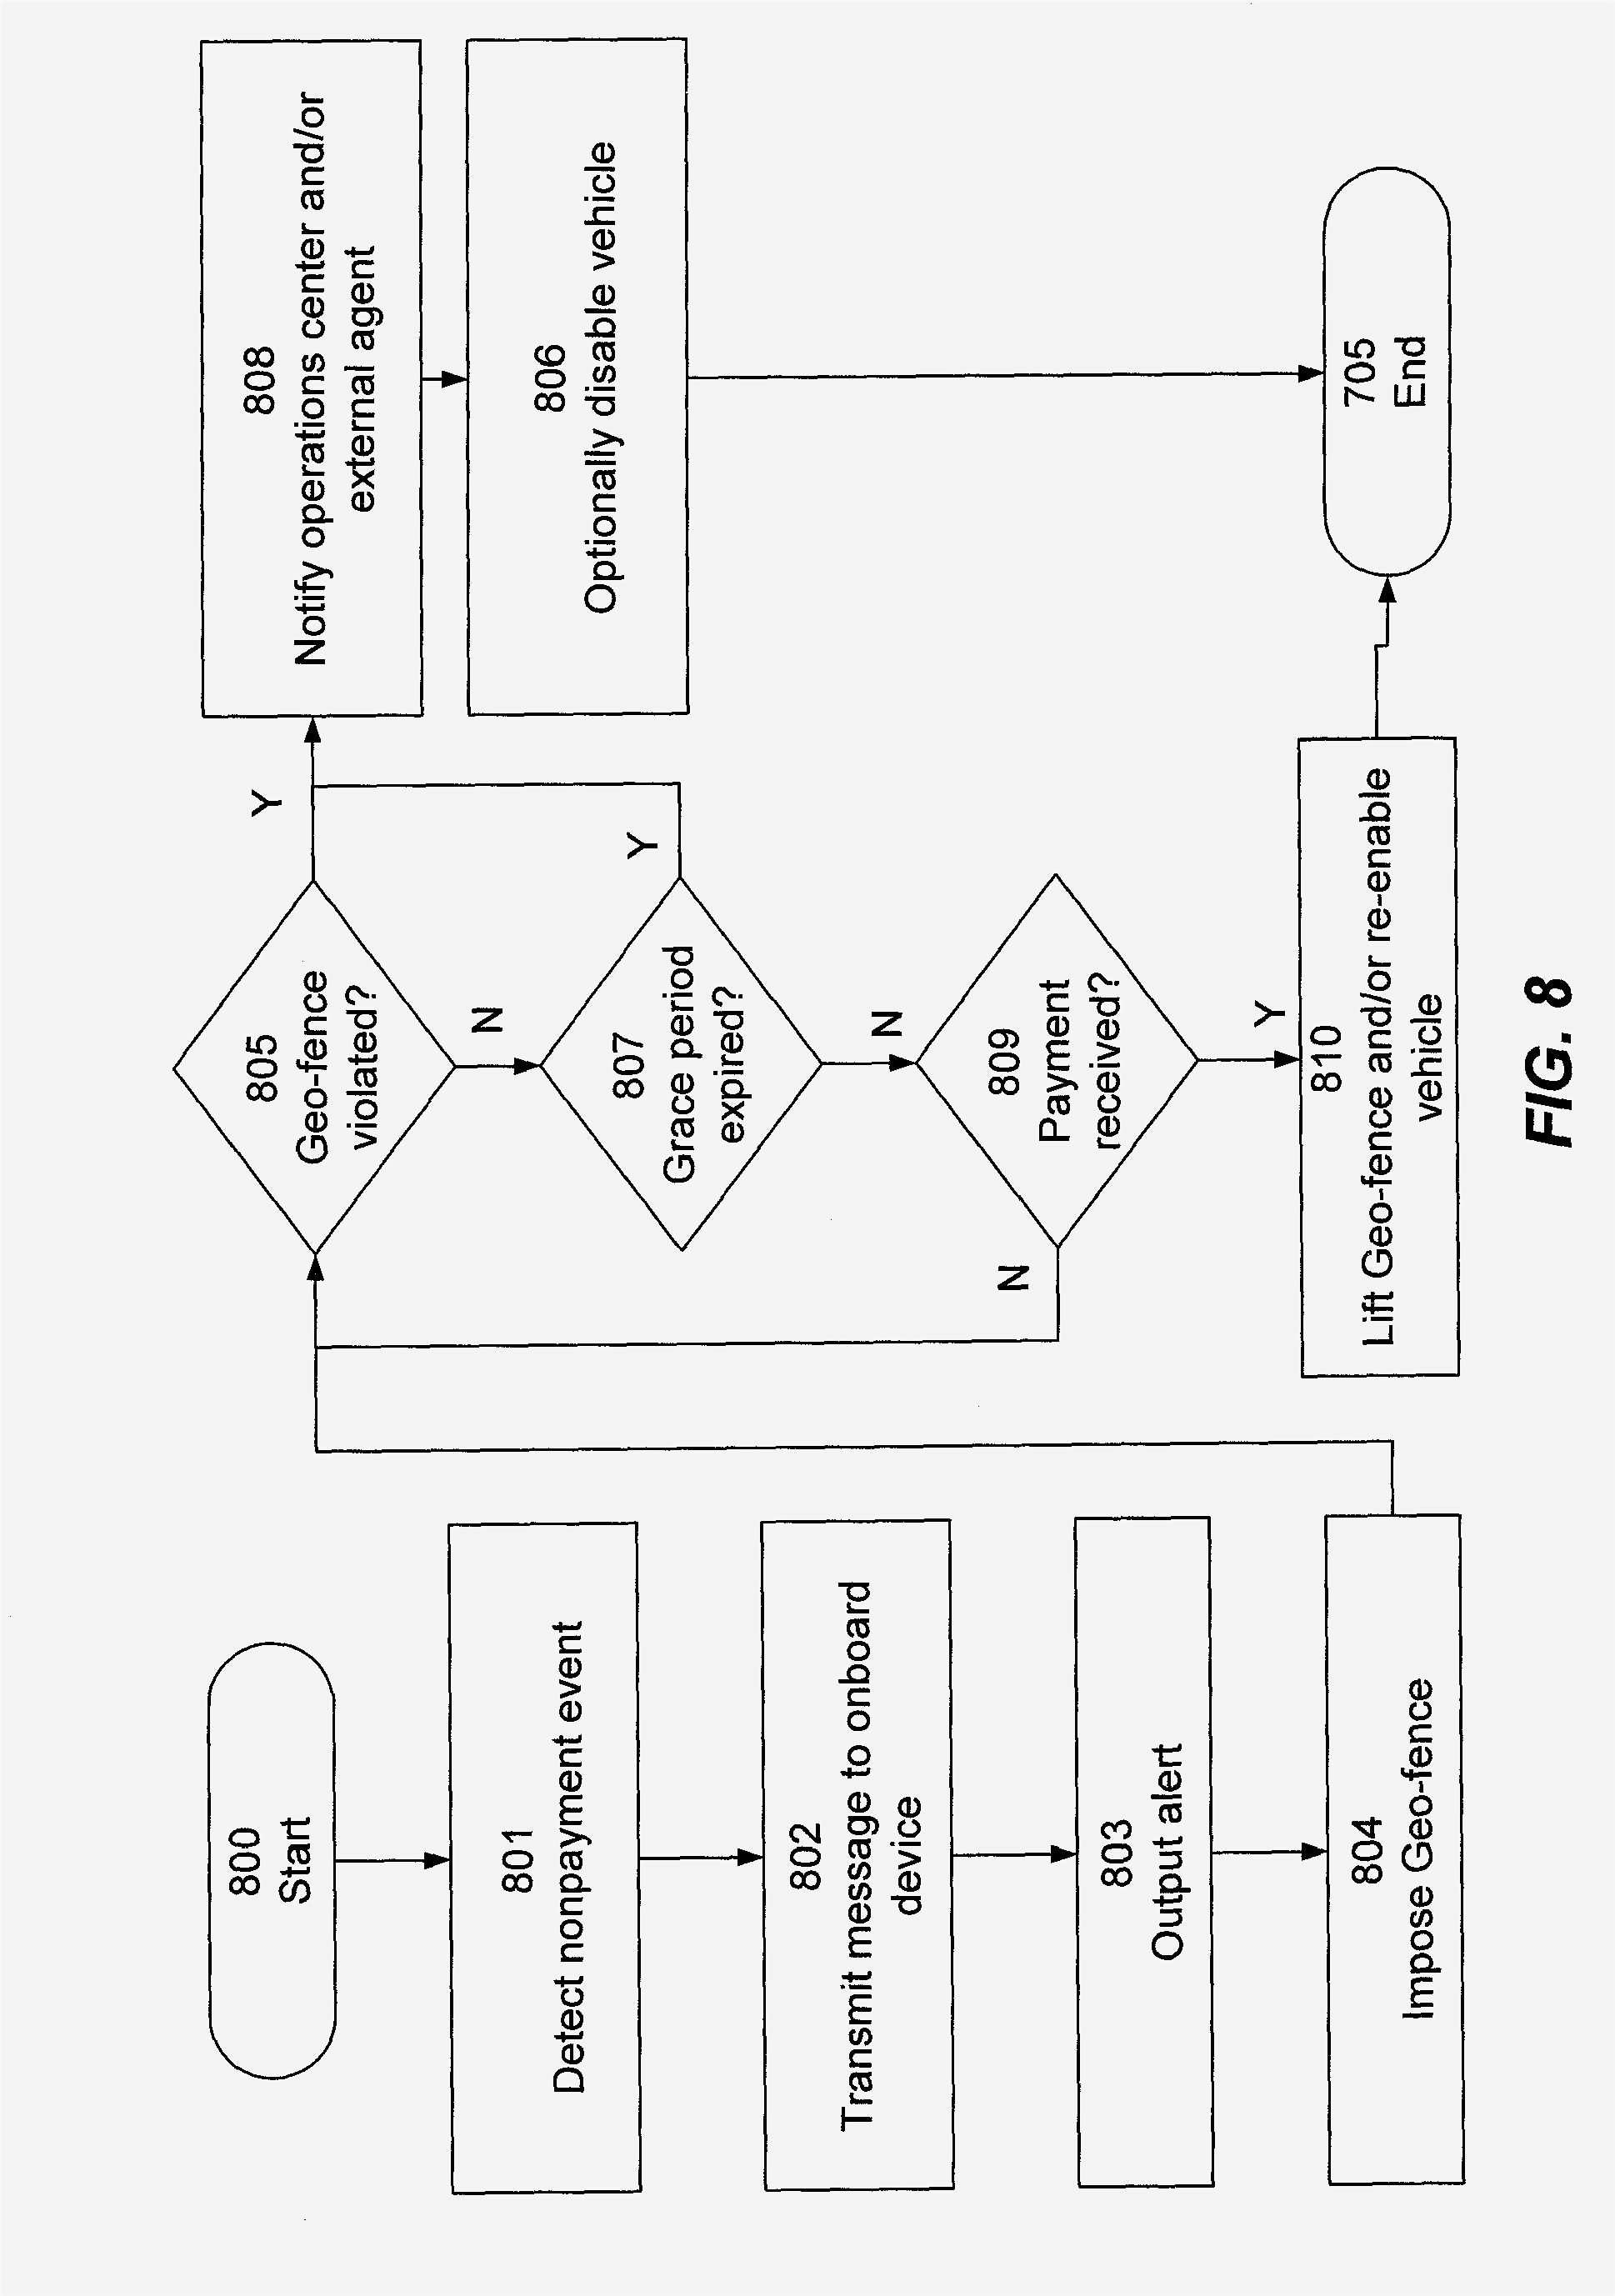 Diagram Passtime Pte 3 Wiring Diagram Full Version Hd Quality Wiring Diagram Diagramstudy Scacchiruta It